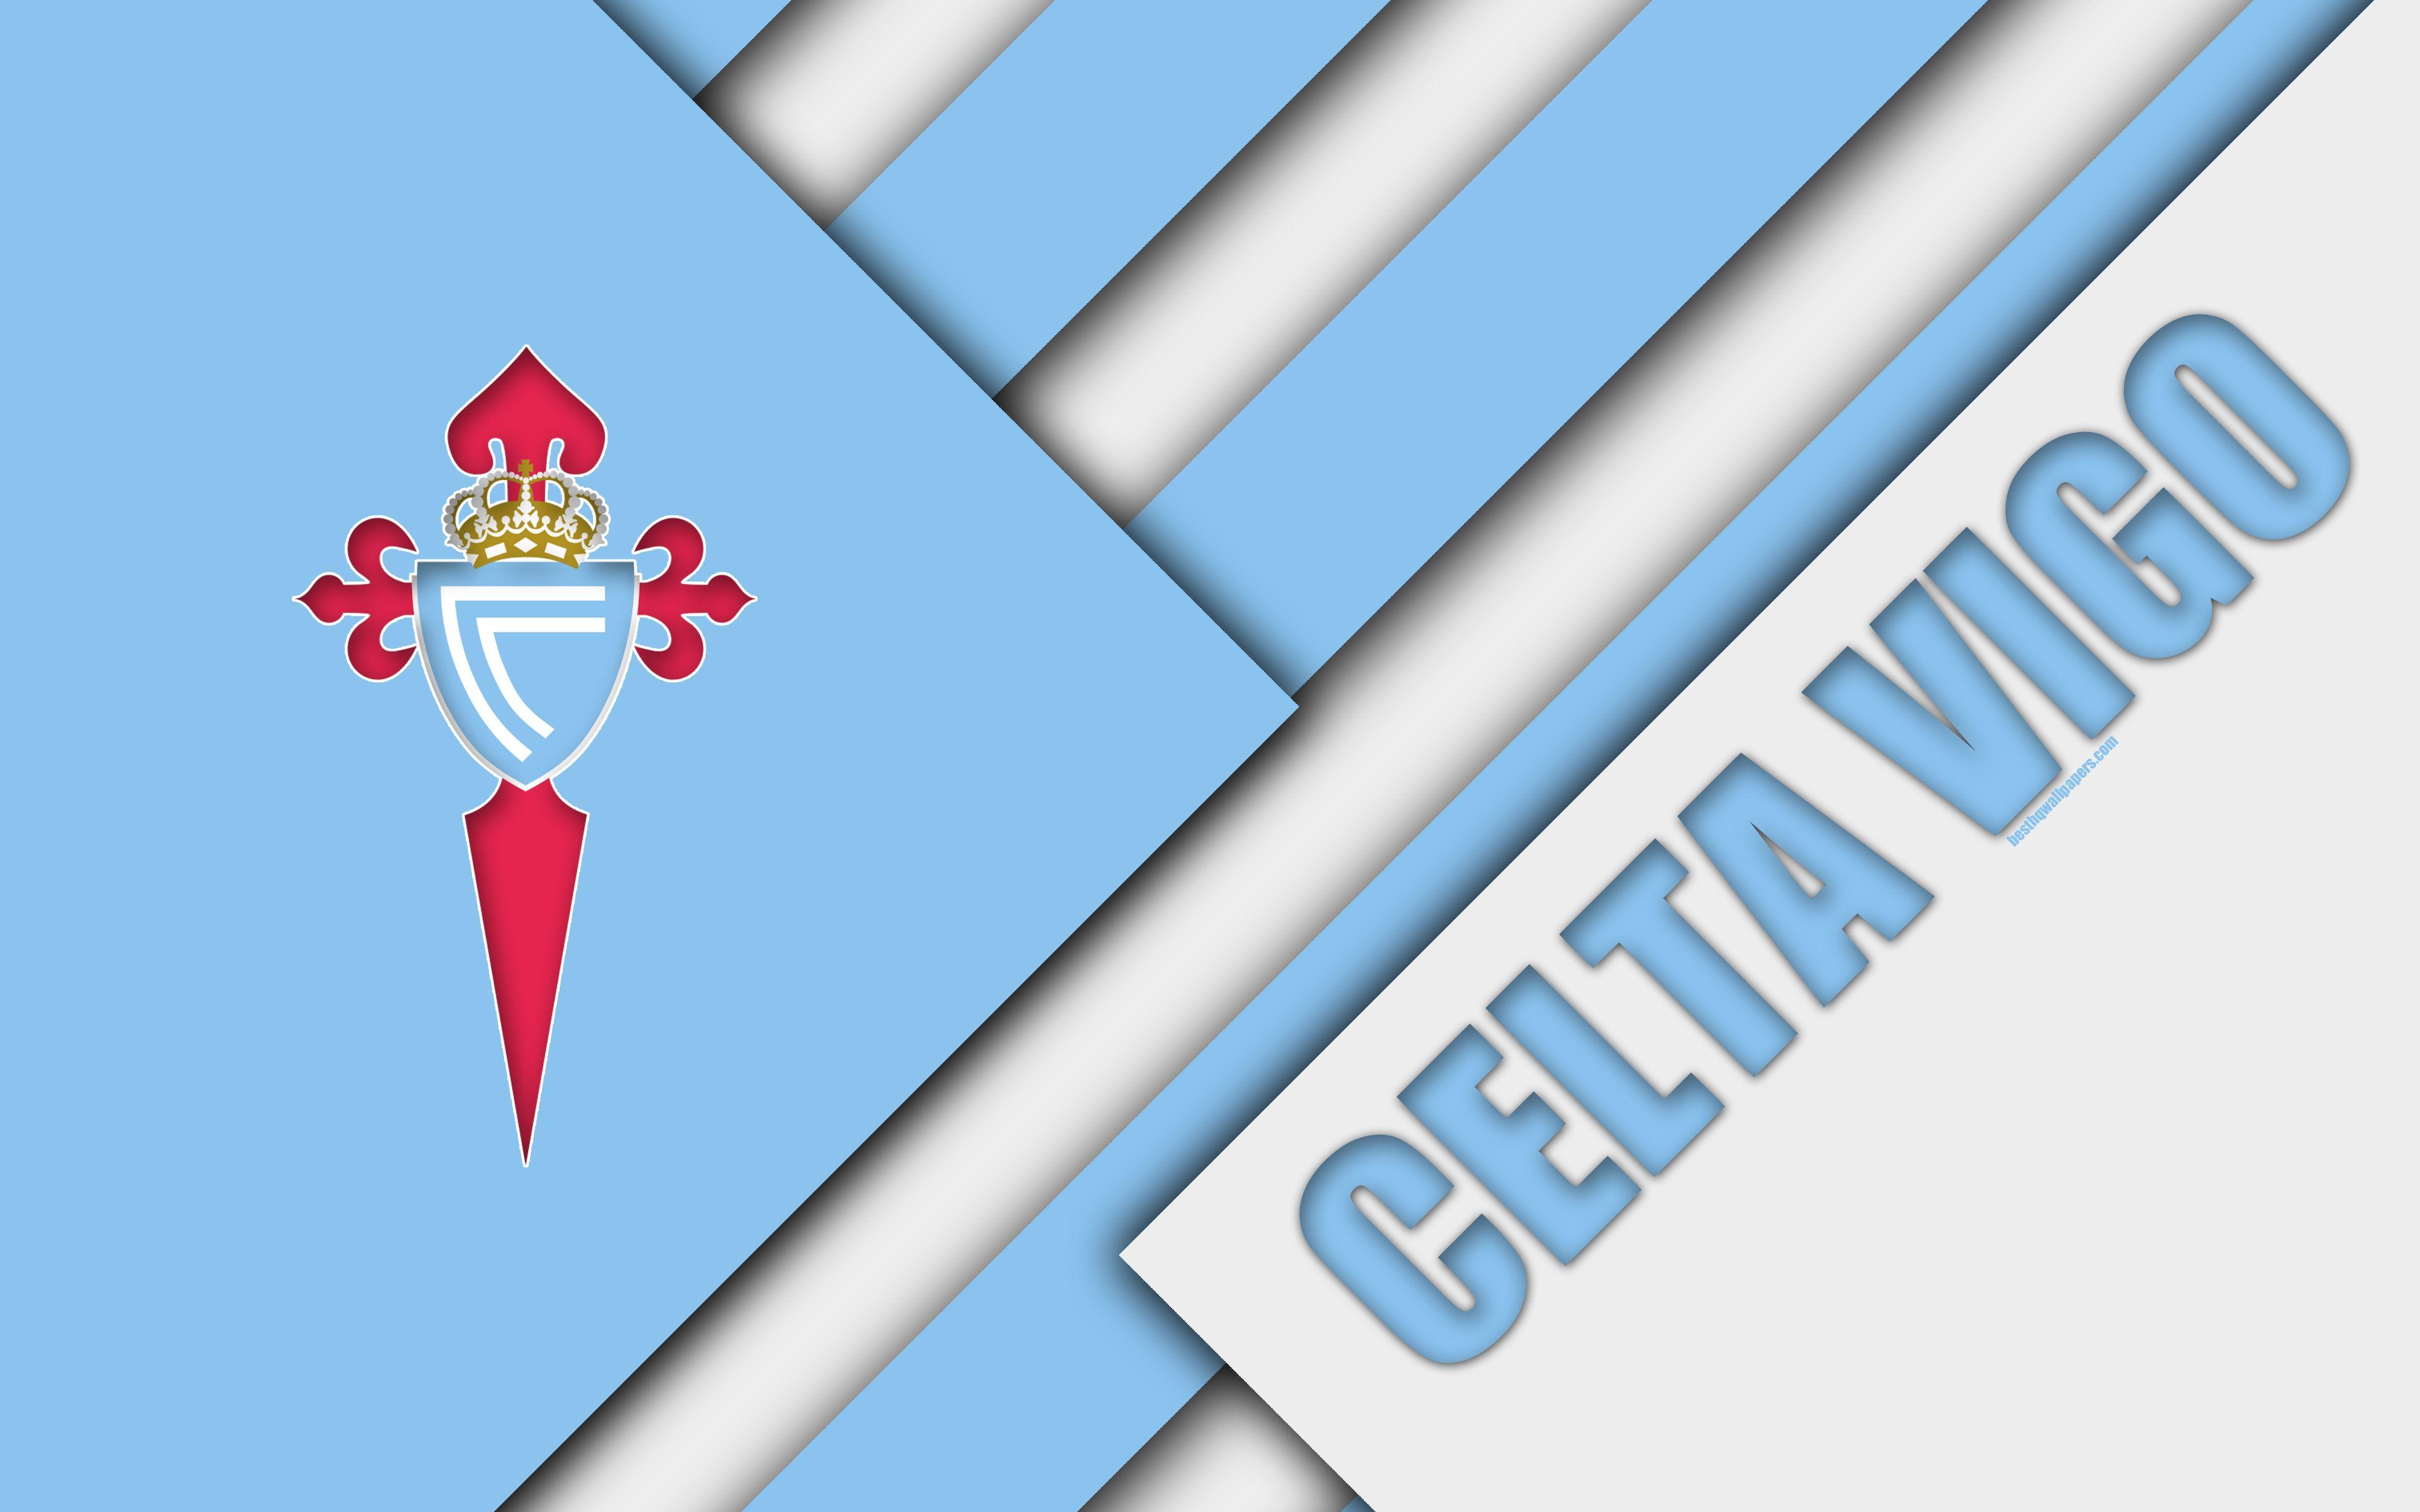 Celta De Vigo / RC Celta de Vigo Wikiwand / All scores of the played